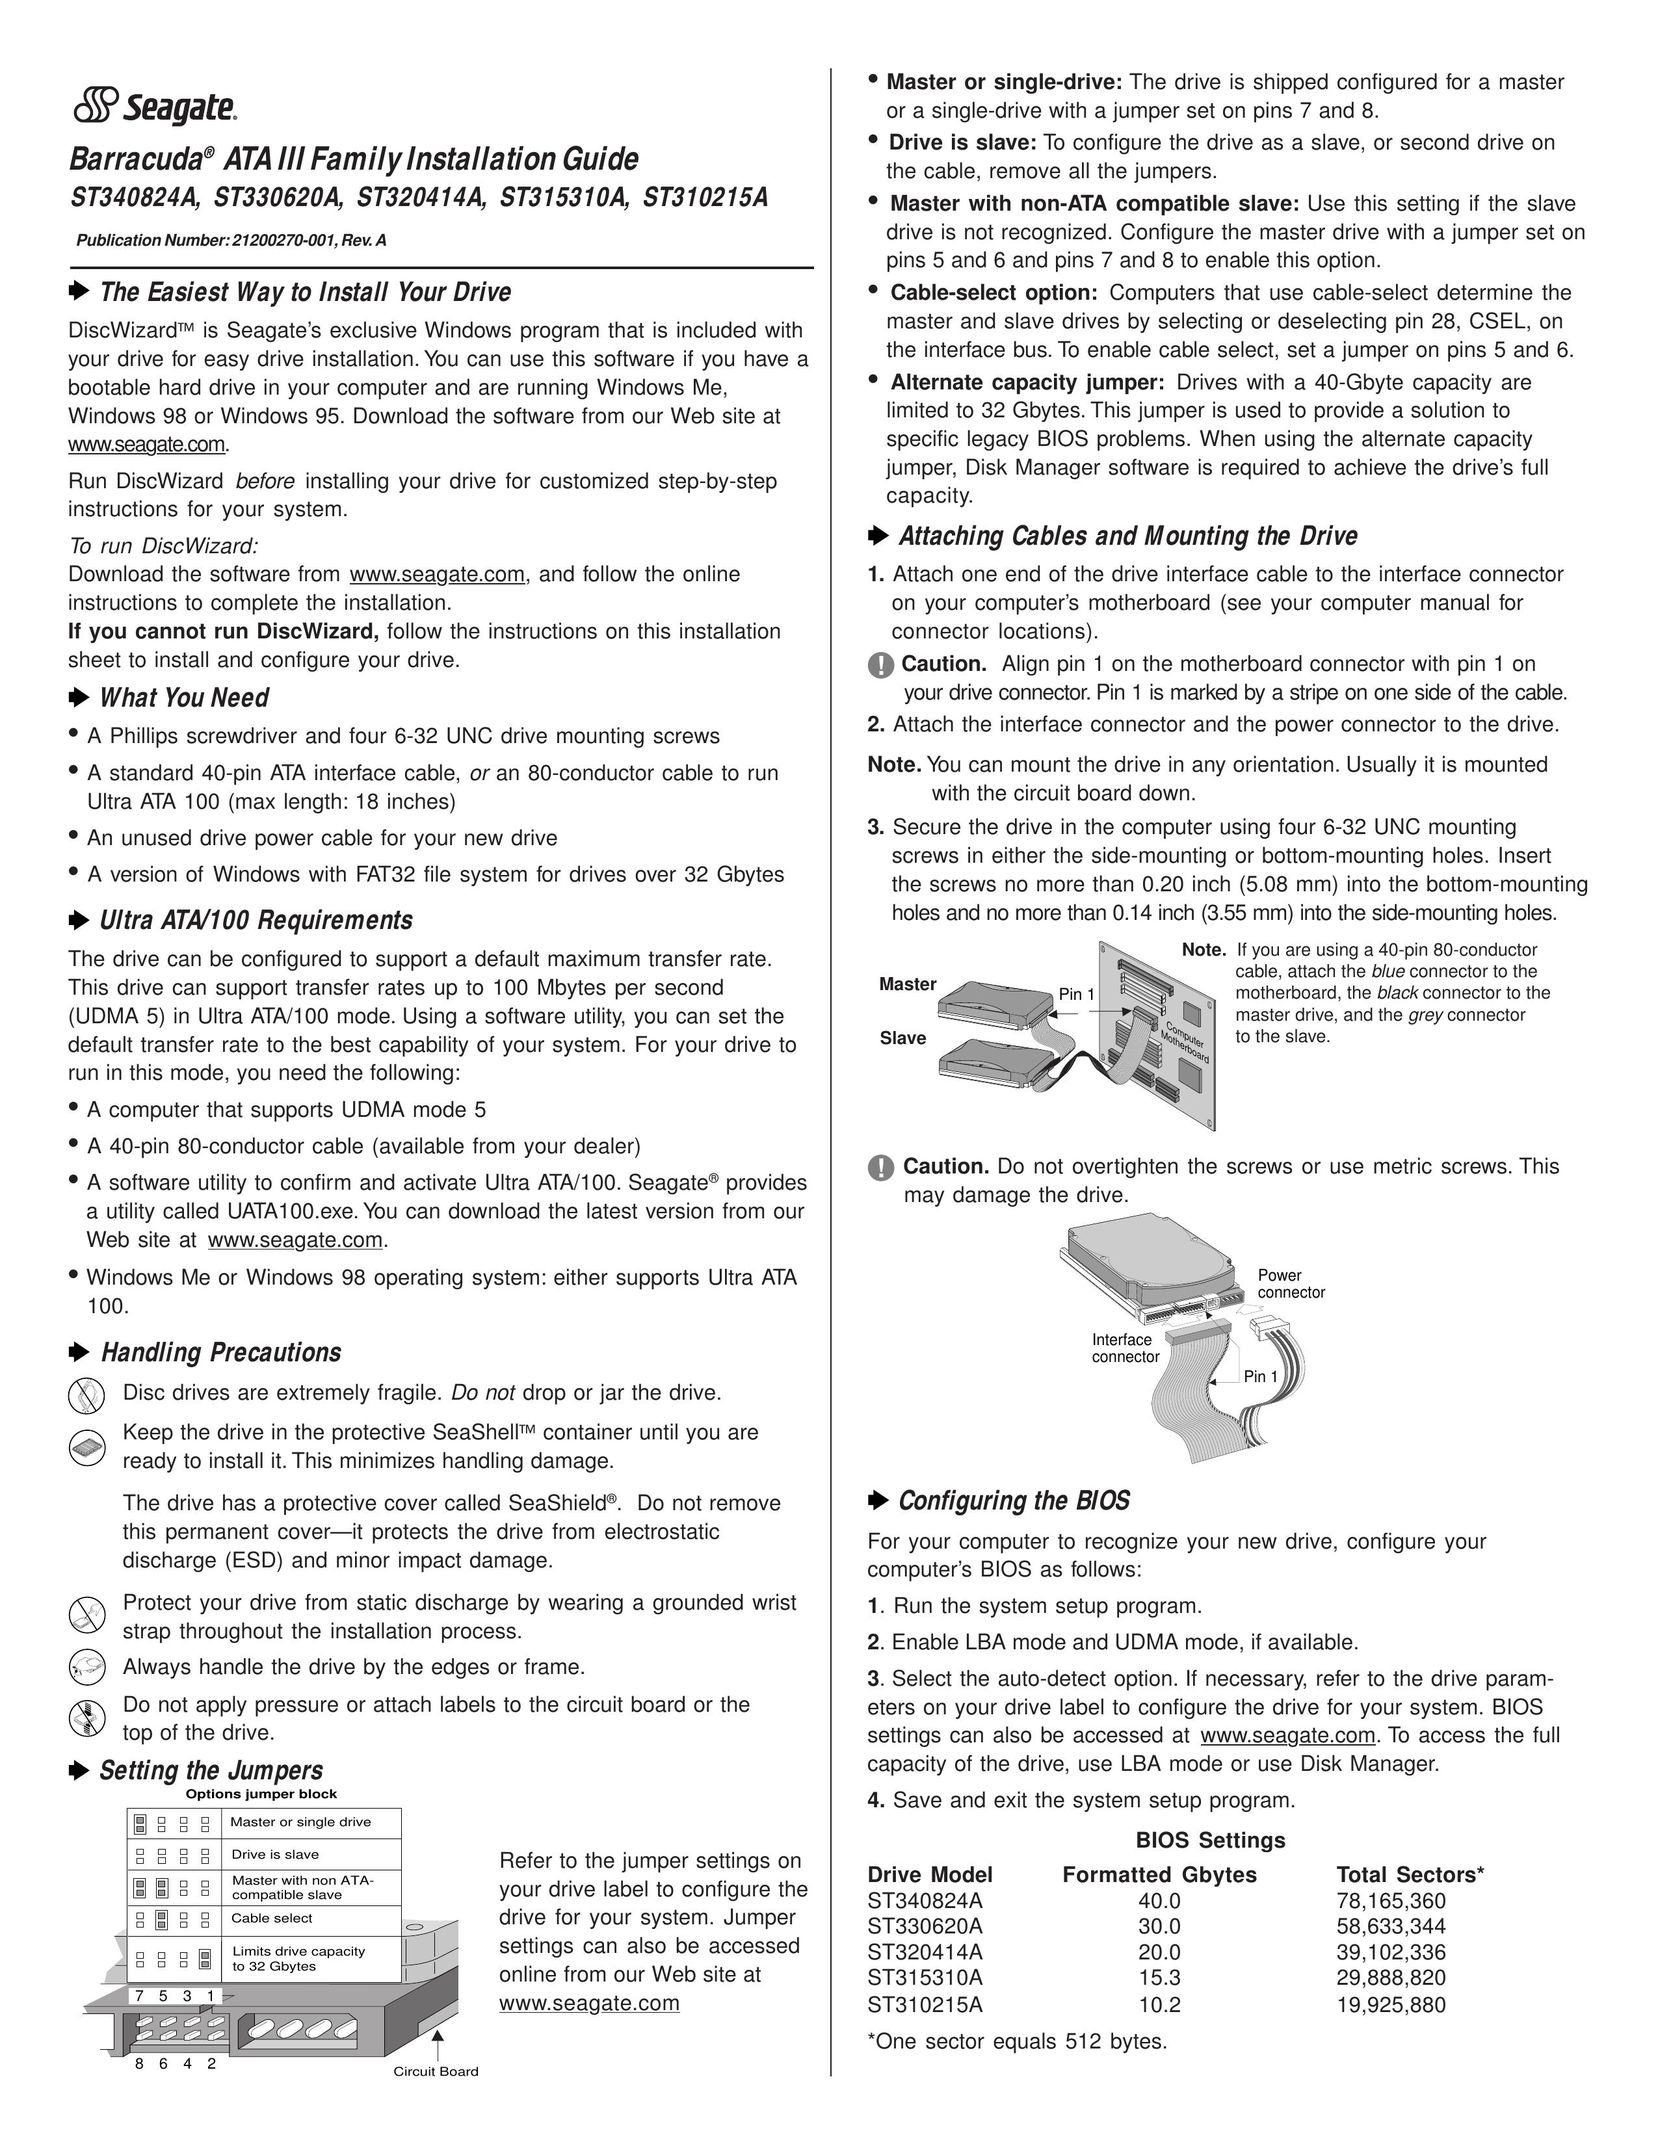 Barracuda Networks ST310215A Computer Drive User Manual